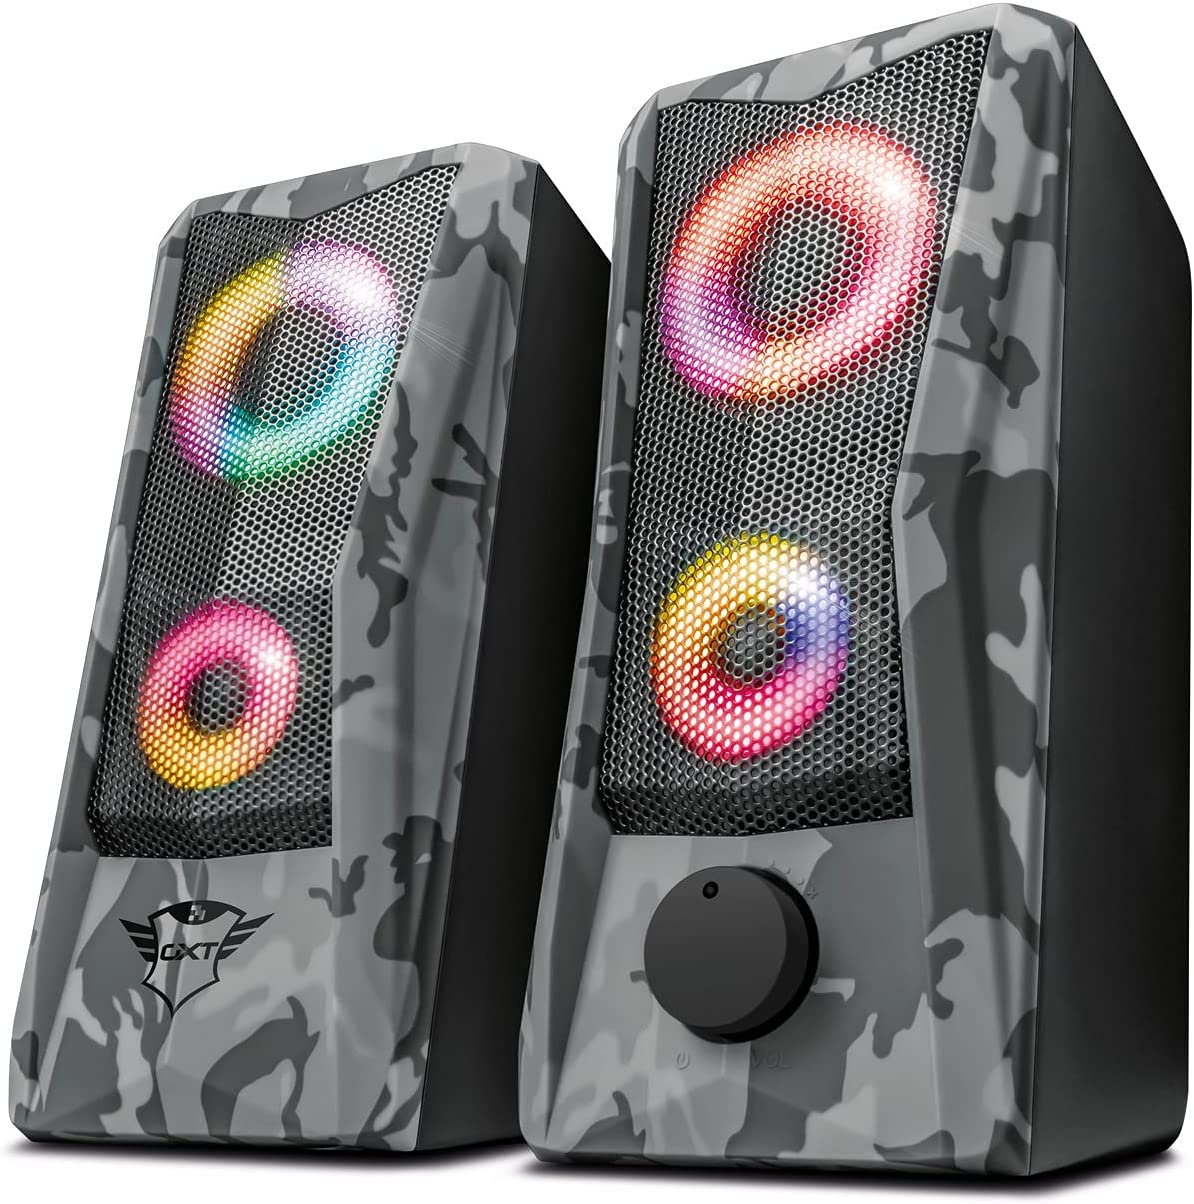 Oraal kruipen Tekstschrijver Trust Gaming GXT 606 Javv RGB-Illuminated 2.0 PC Speakers | eTeknix